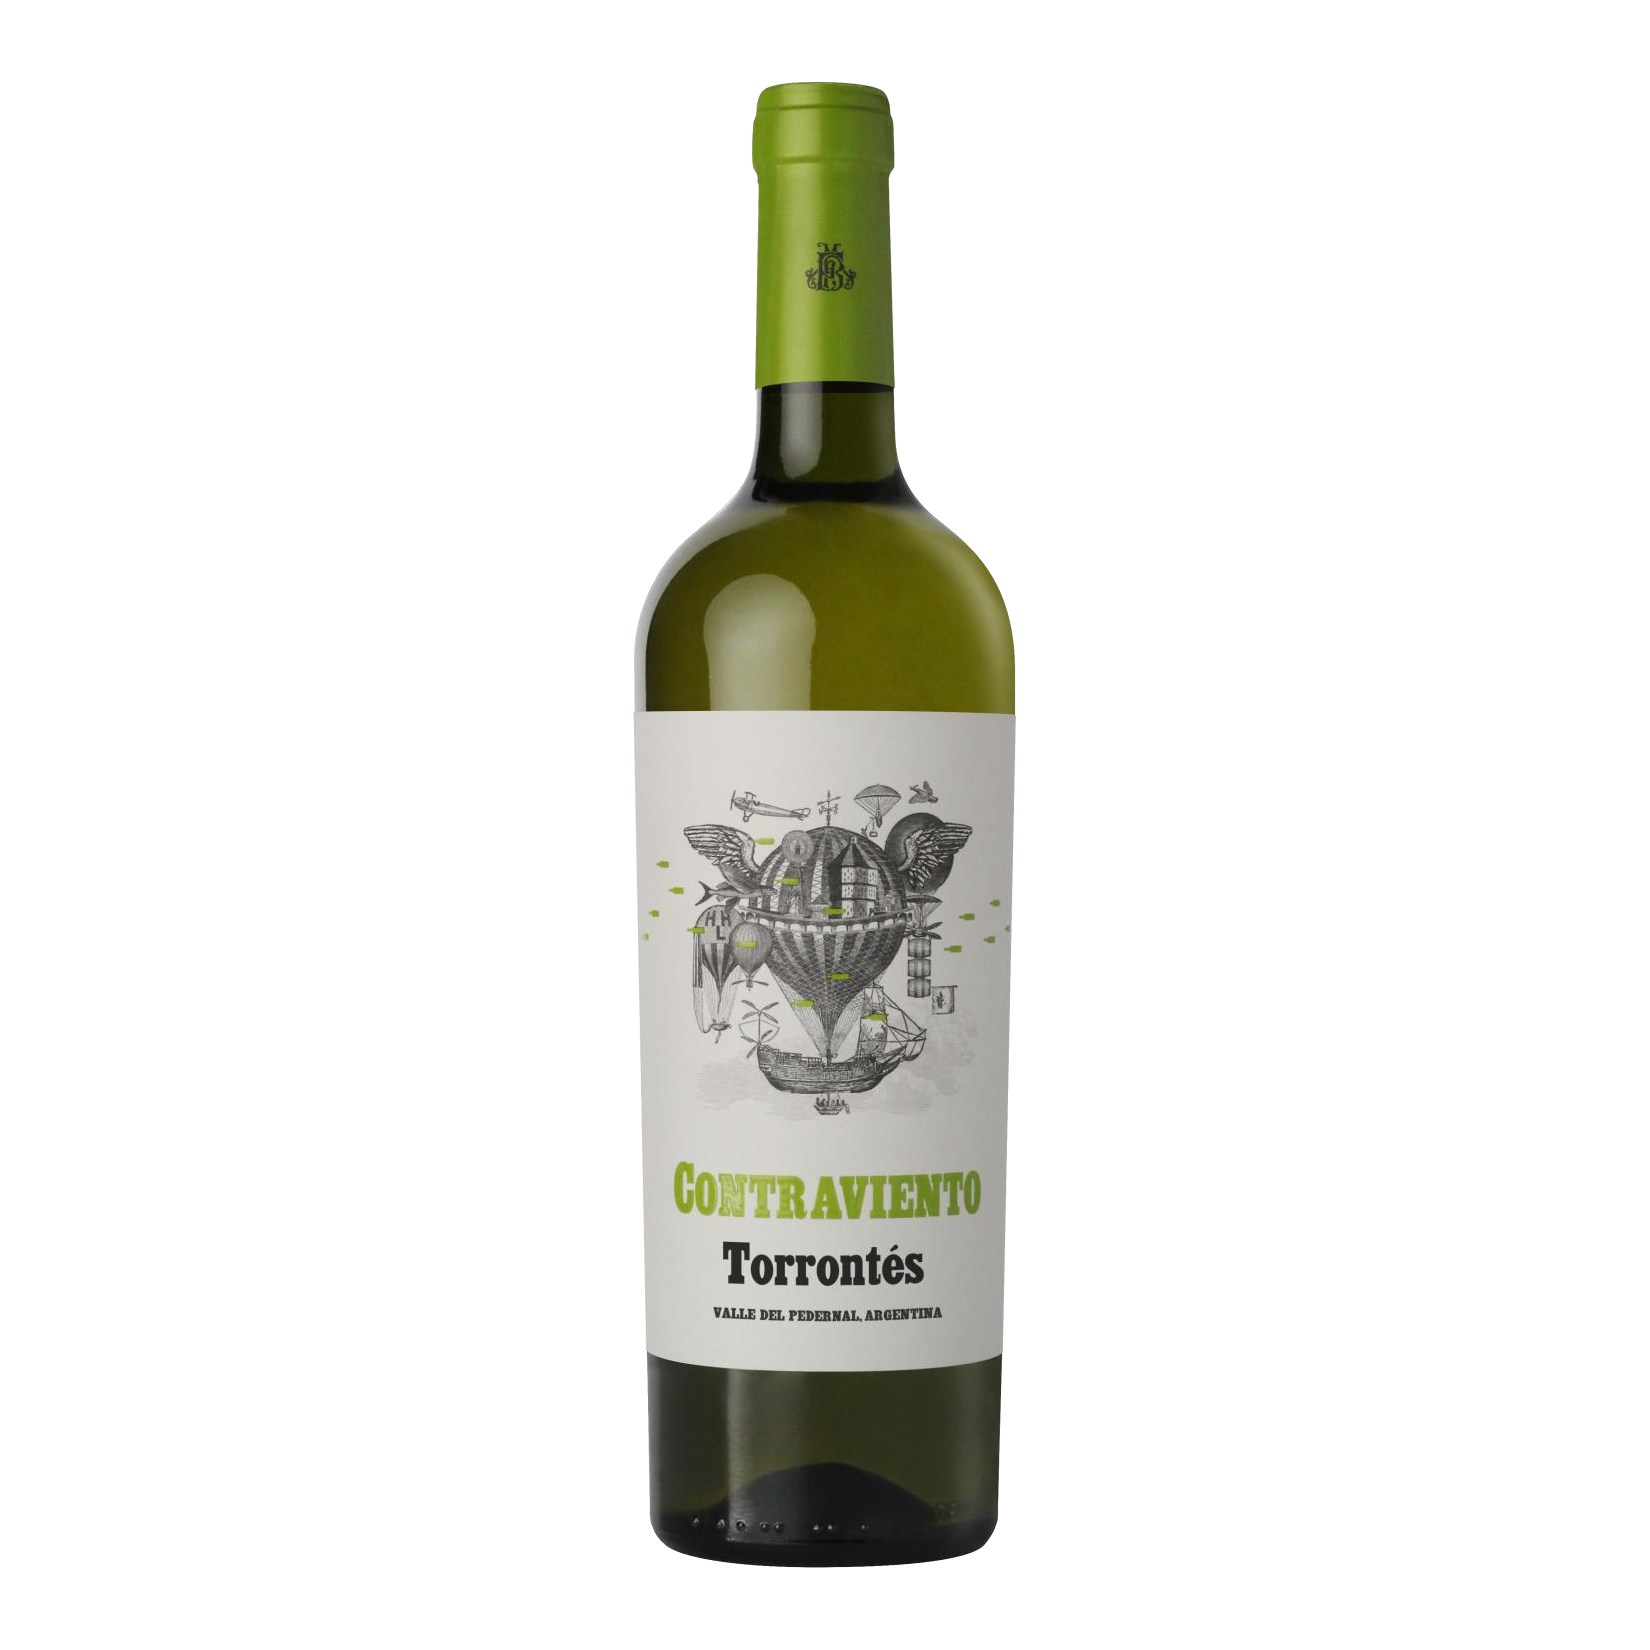 Торронтес вино белое. Вино Аргентина белое Torrontes. Торронтес вино Аргентина. Торос Сентенарио Шенен Торронтес. Фуего Бланко контравьенто Мальбек резерва.